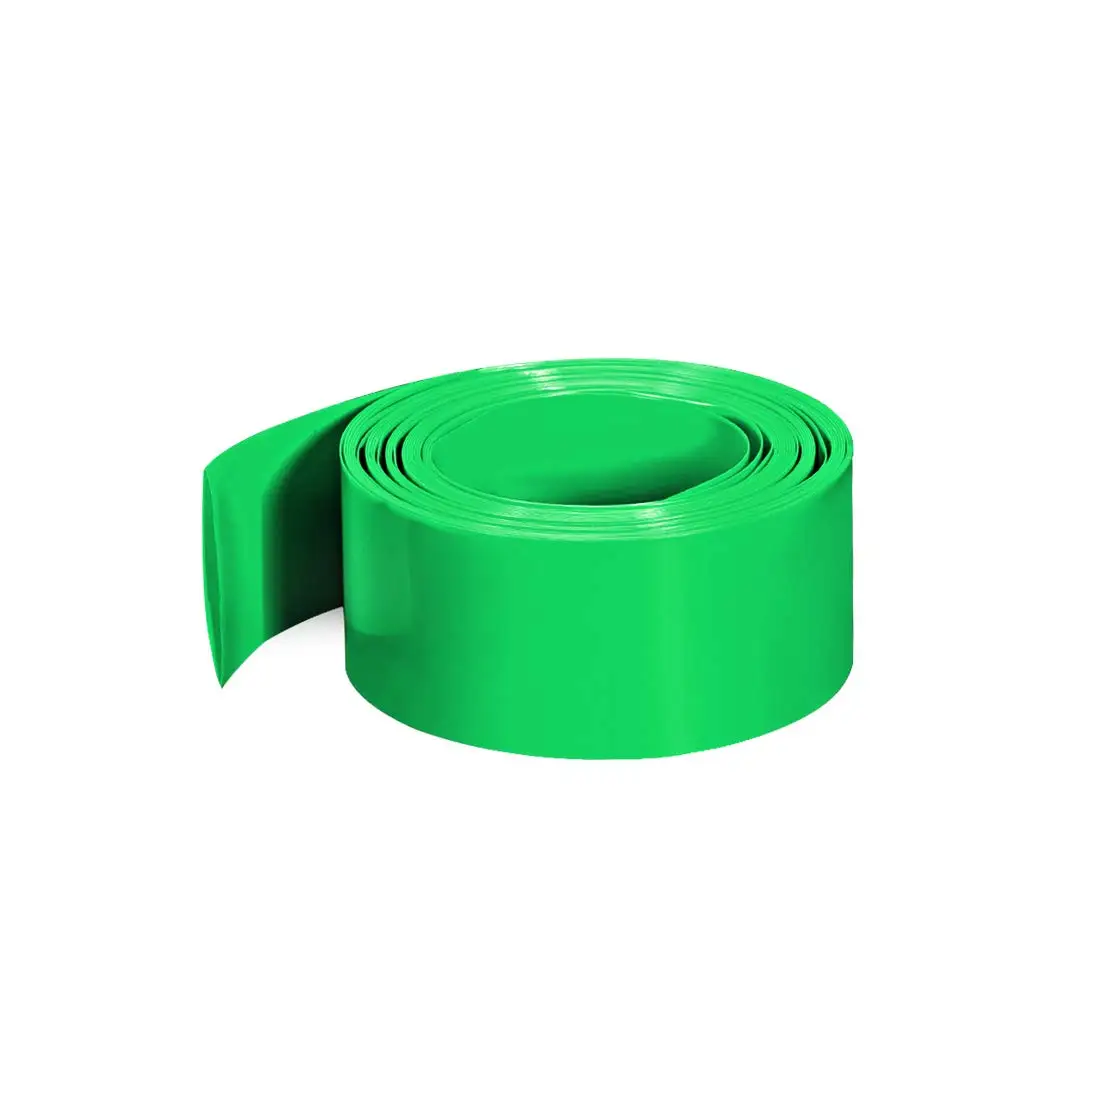 

Keszoox PVC Heat Shrink Tubing 29.5mm Flat Width Pre Cut Heat Shrink Wrap Tube for Single 18650 2m Length Green